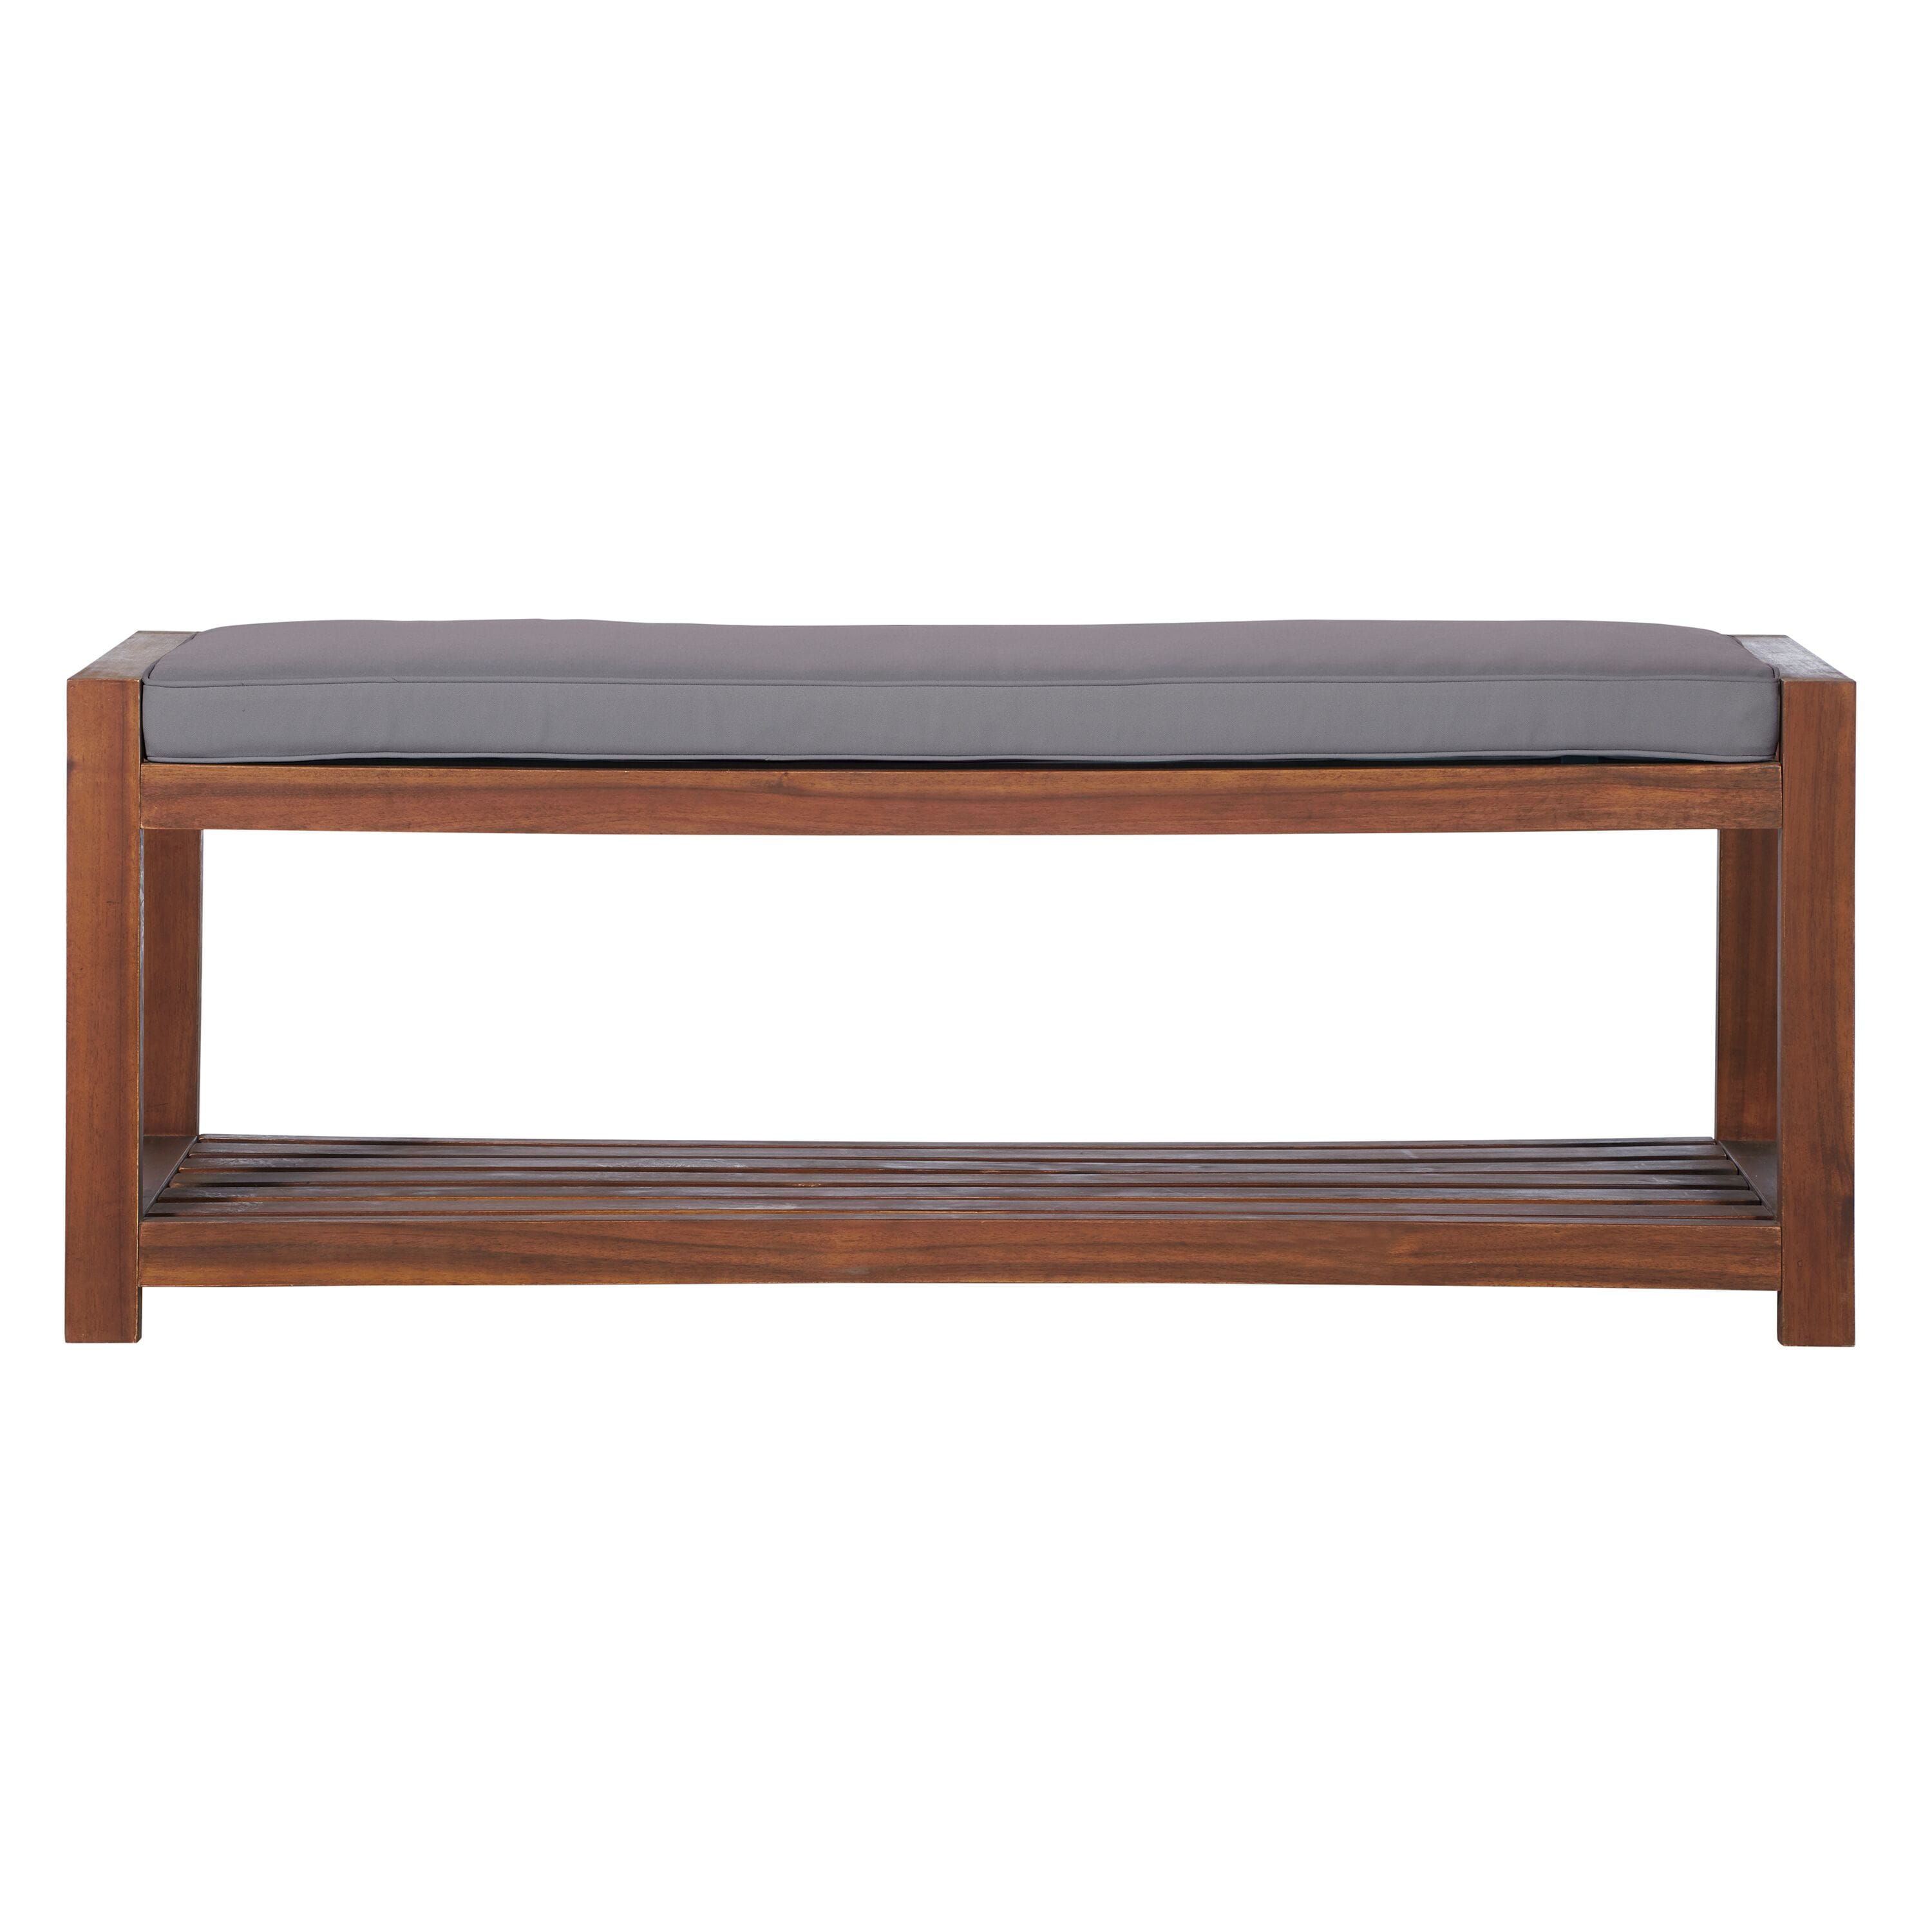 48 Inch Patio Wood Bench With Cushion Dark Brown Grey By Walker Edison